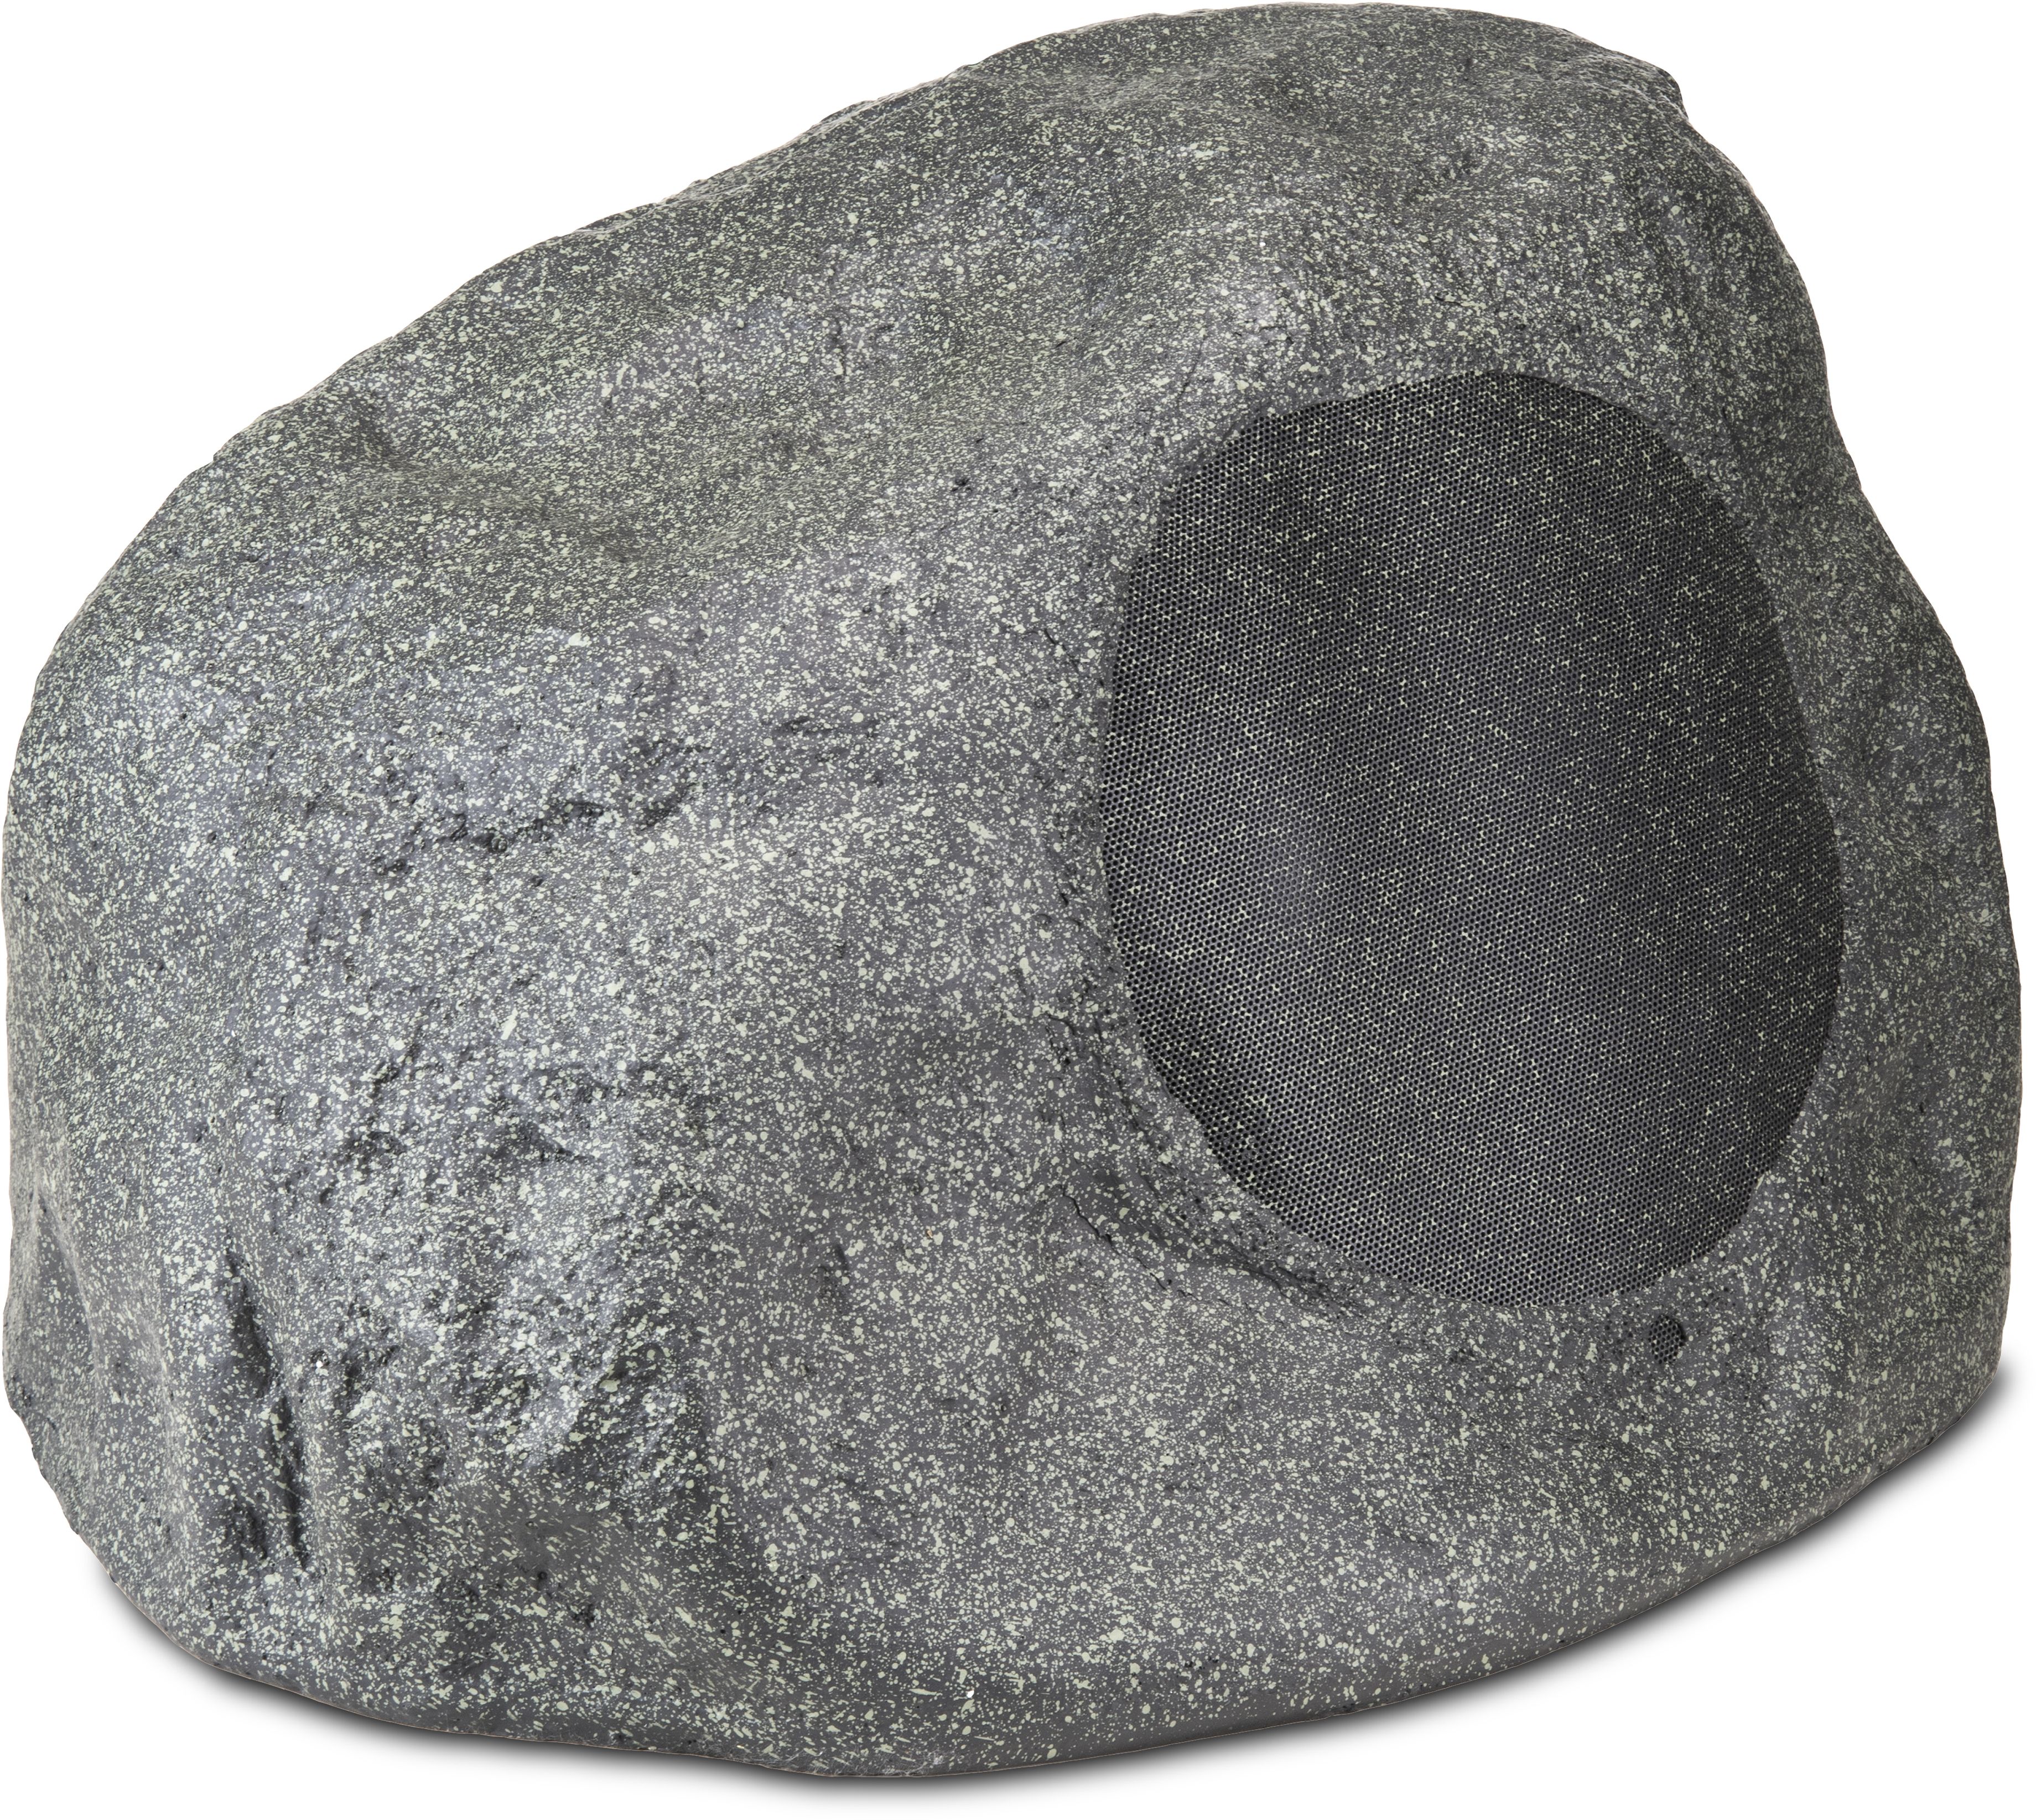 Klipsch® Professional Series 10" Granite Rock Subwoofer